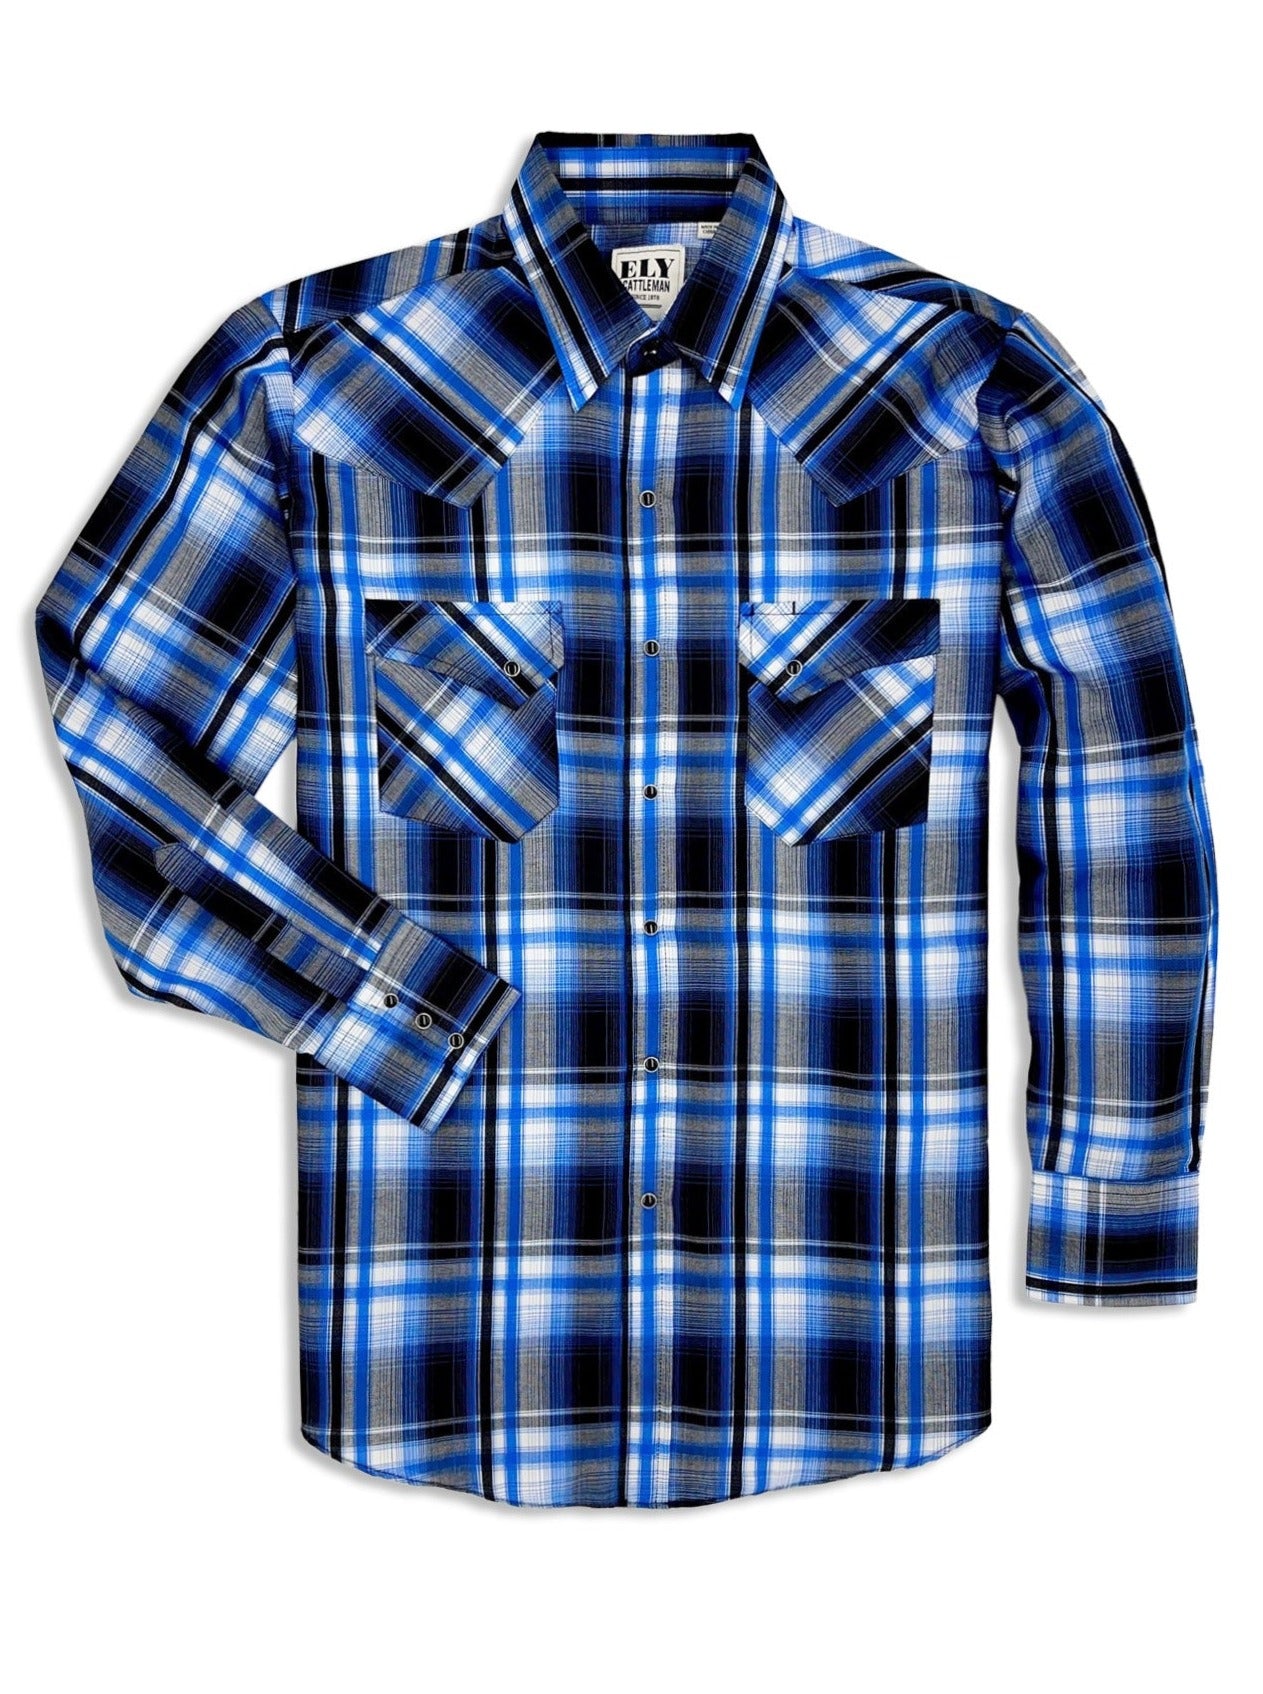 Ely Cattleman Western Pearl Snap Shirt Mens Size XL, Blue Plaid, Long  Sleeve Cowboy Shirt 